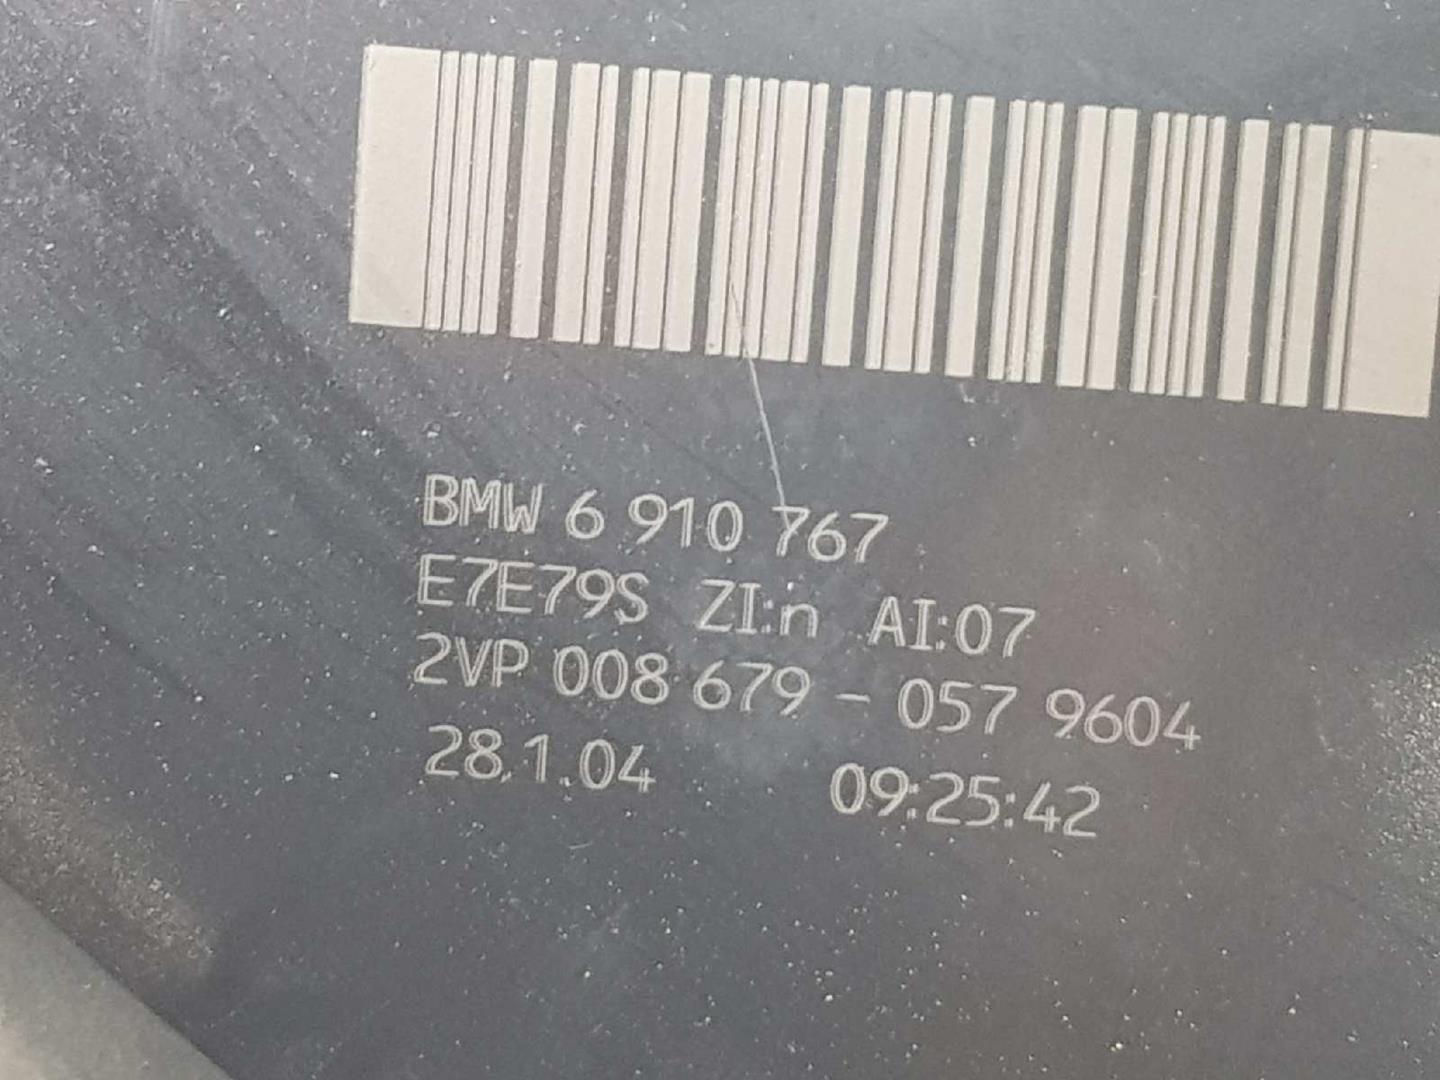 BMW 5 Series E60/E61 (2003-2010) Фонарь задний левый 63217165737, 6910767, 2VP008679 19733657